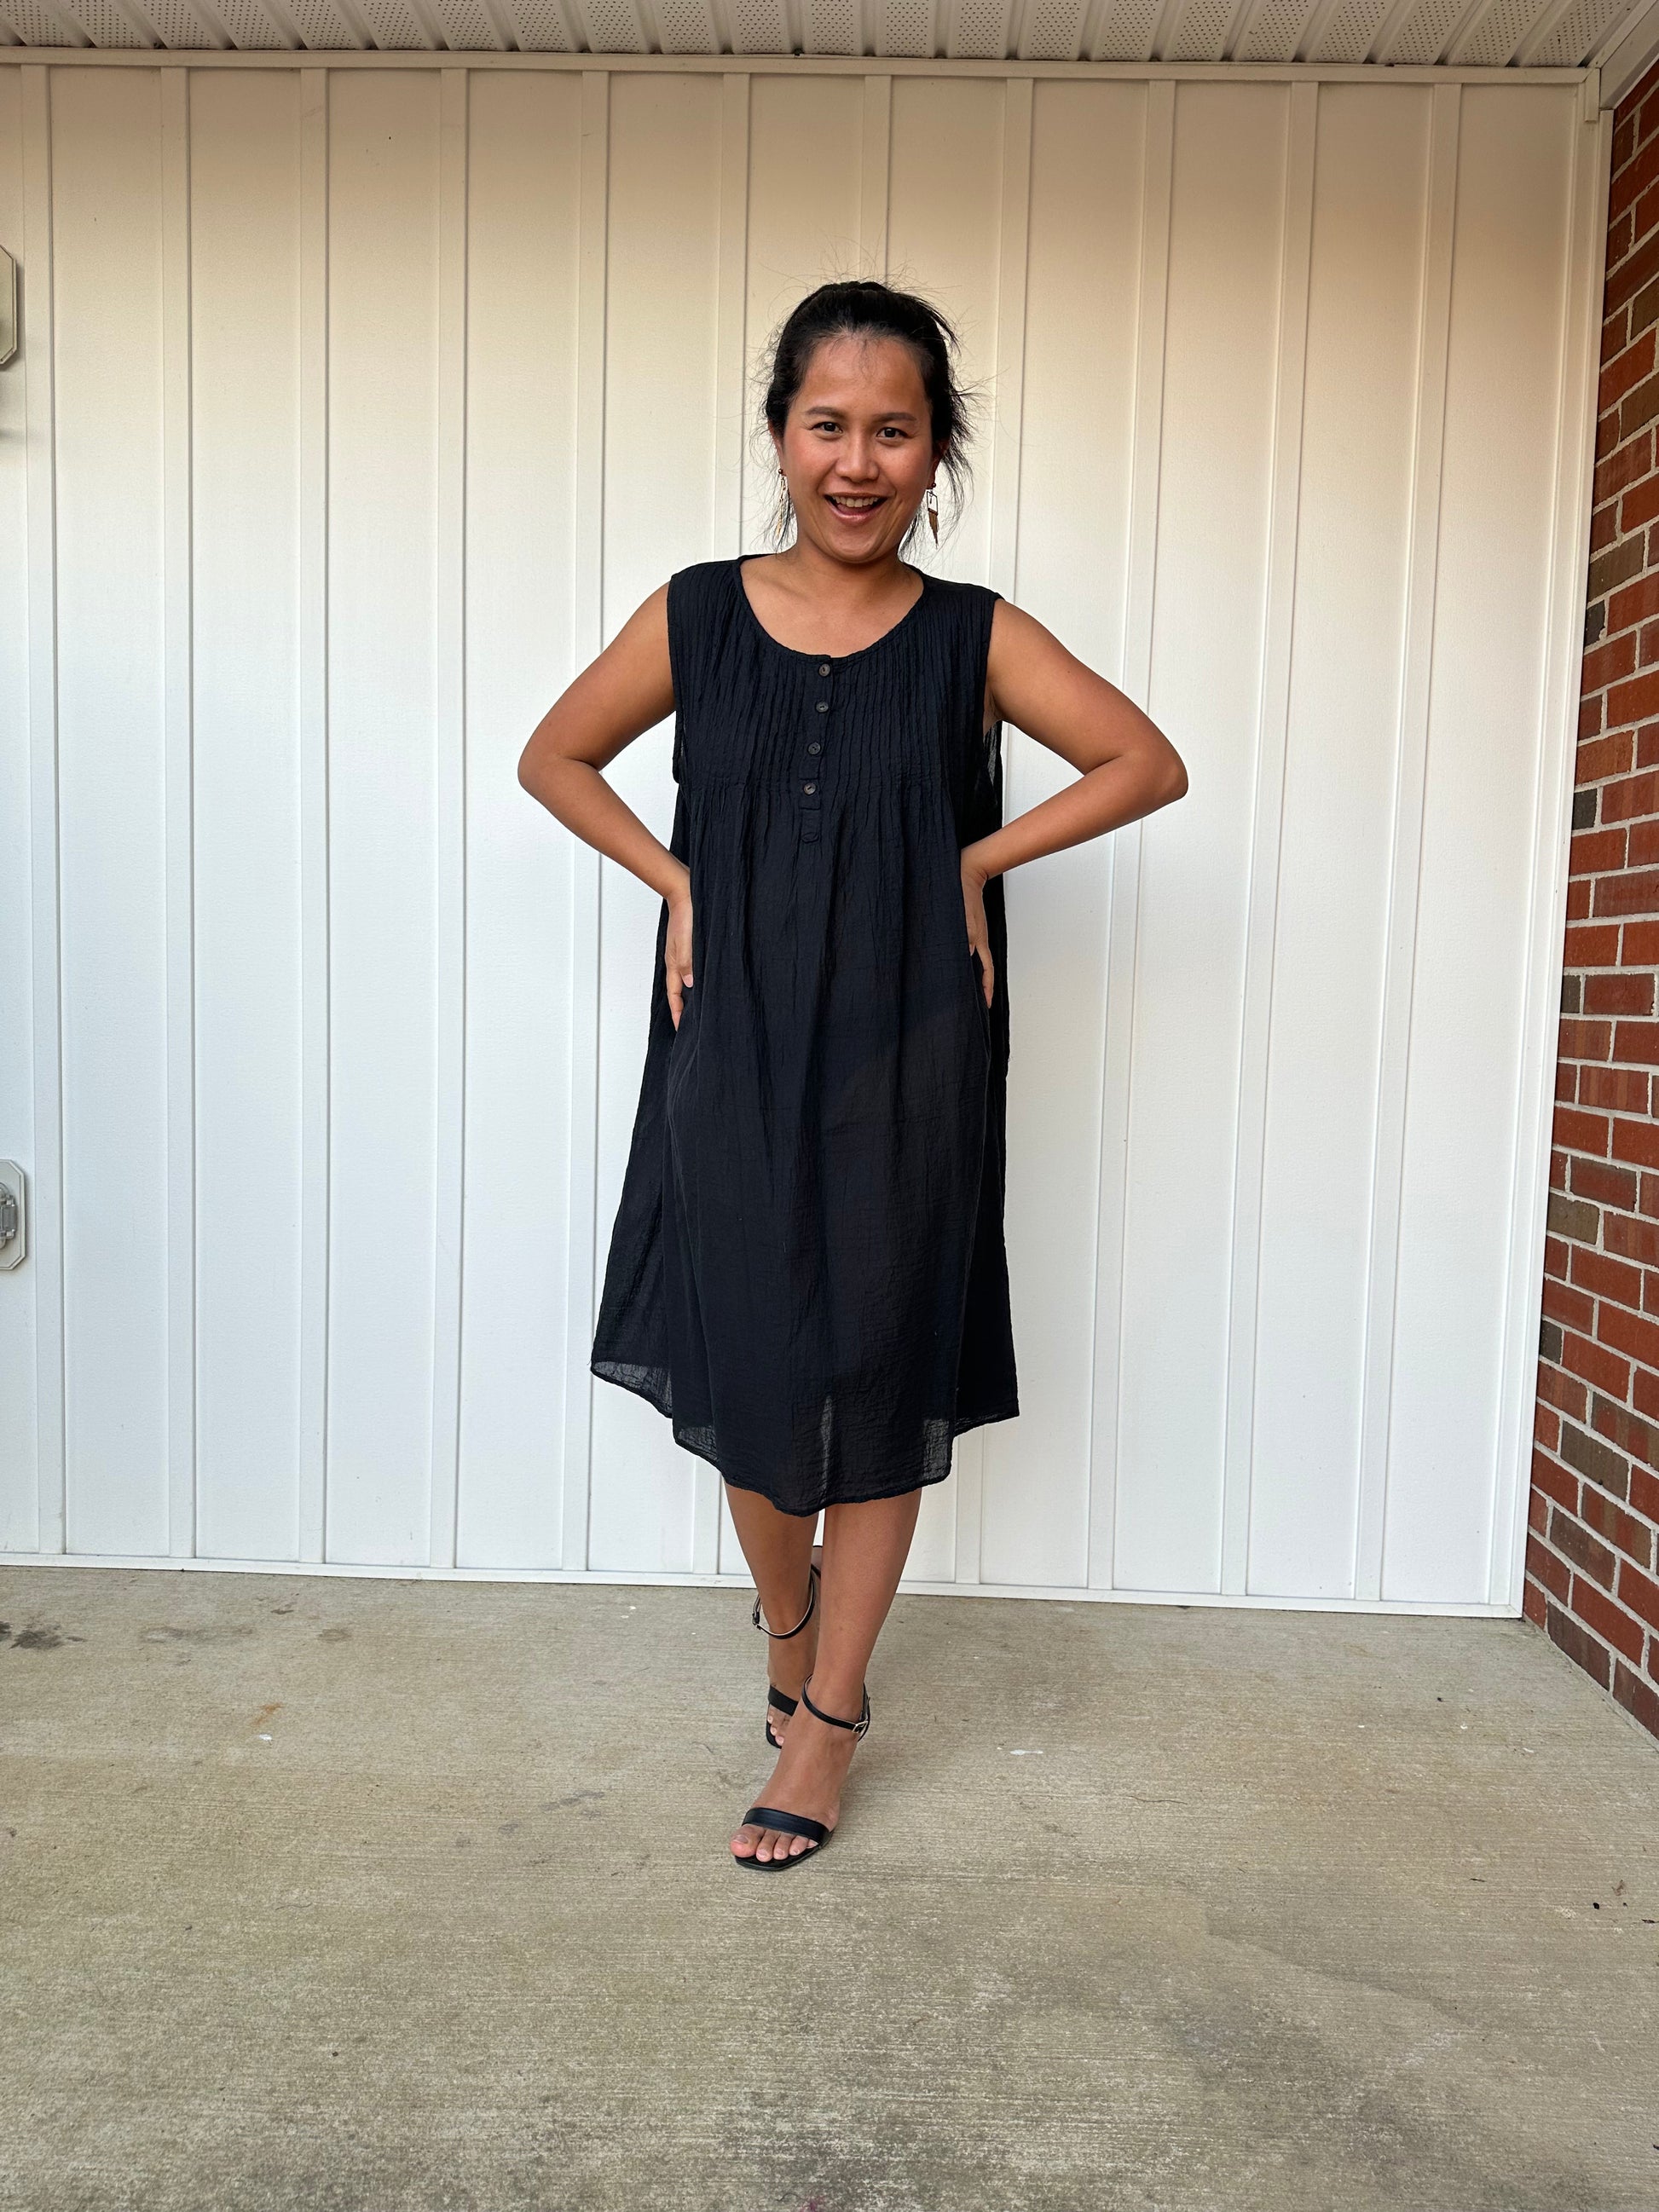 MALA handworks Wowwa Mini dress in Black and Hand Crochet